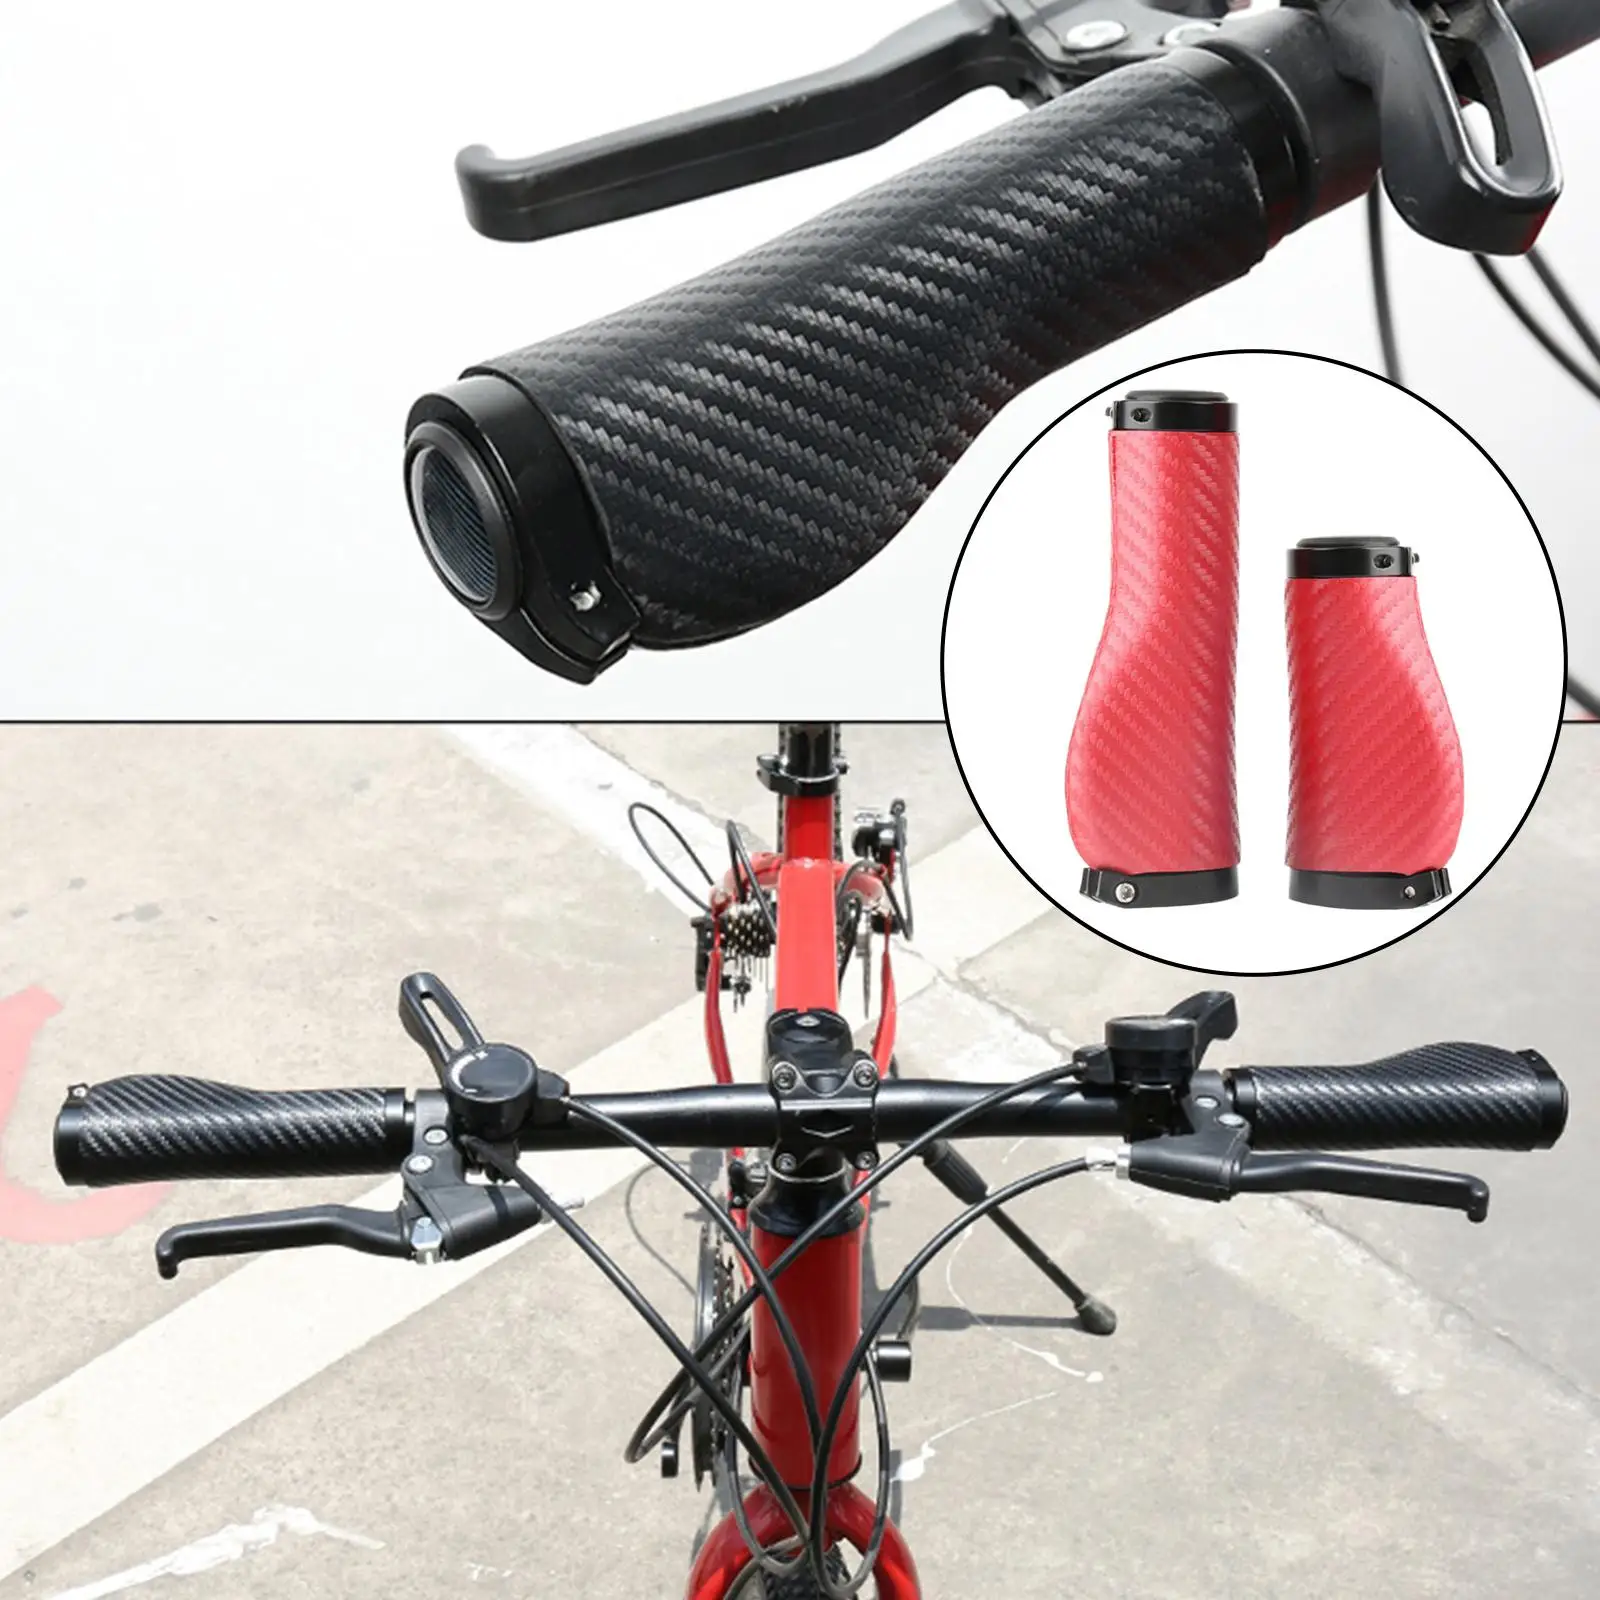 2 Pieces Universal Mountain Bike Handlebar Grips Carbon Fiber Pattern Lockable Non Slip Ergonomic Bar Grips for Scooter Riding